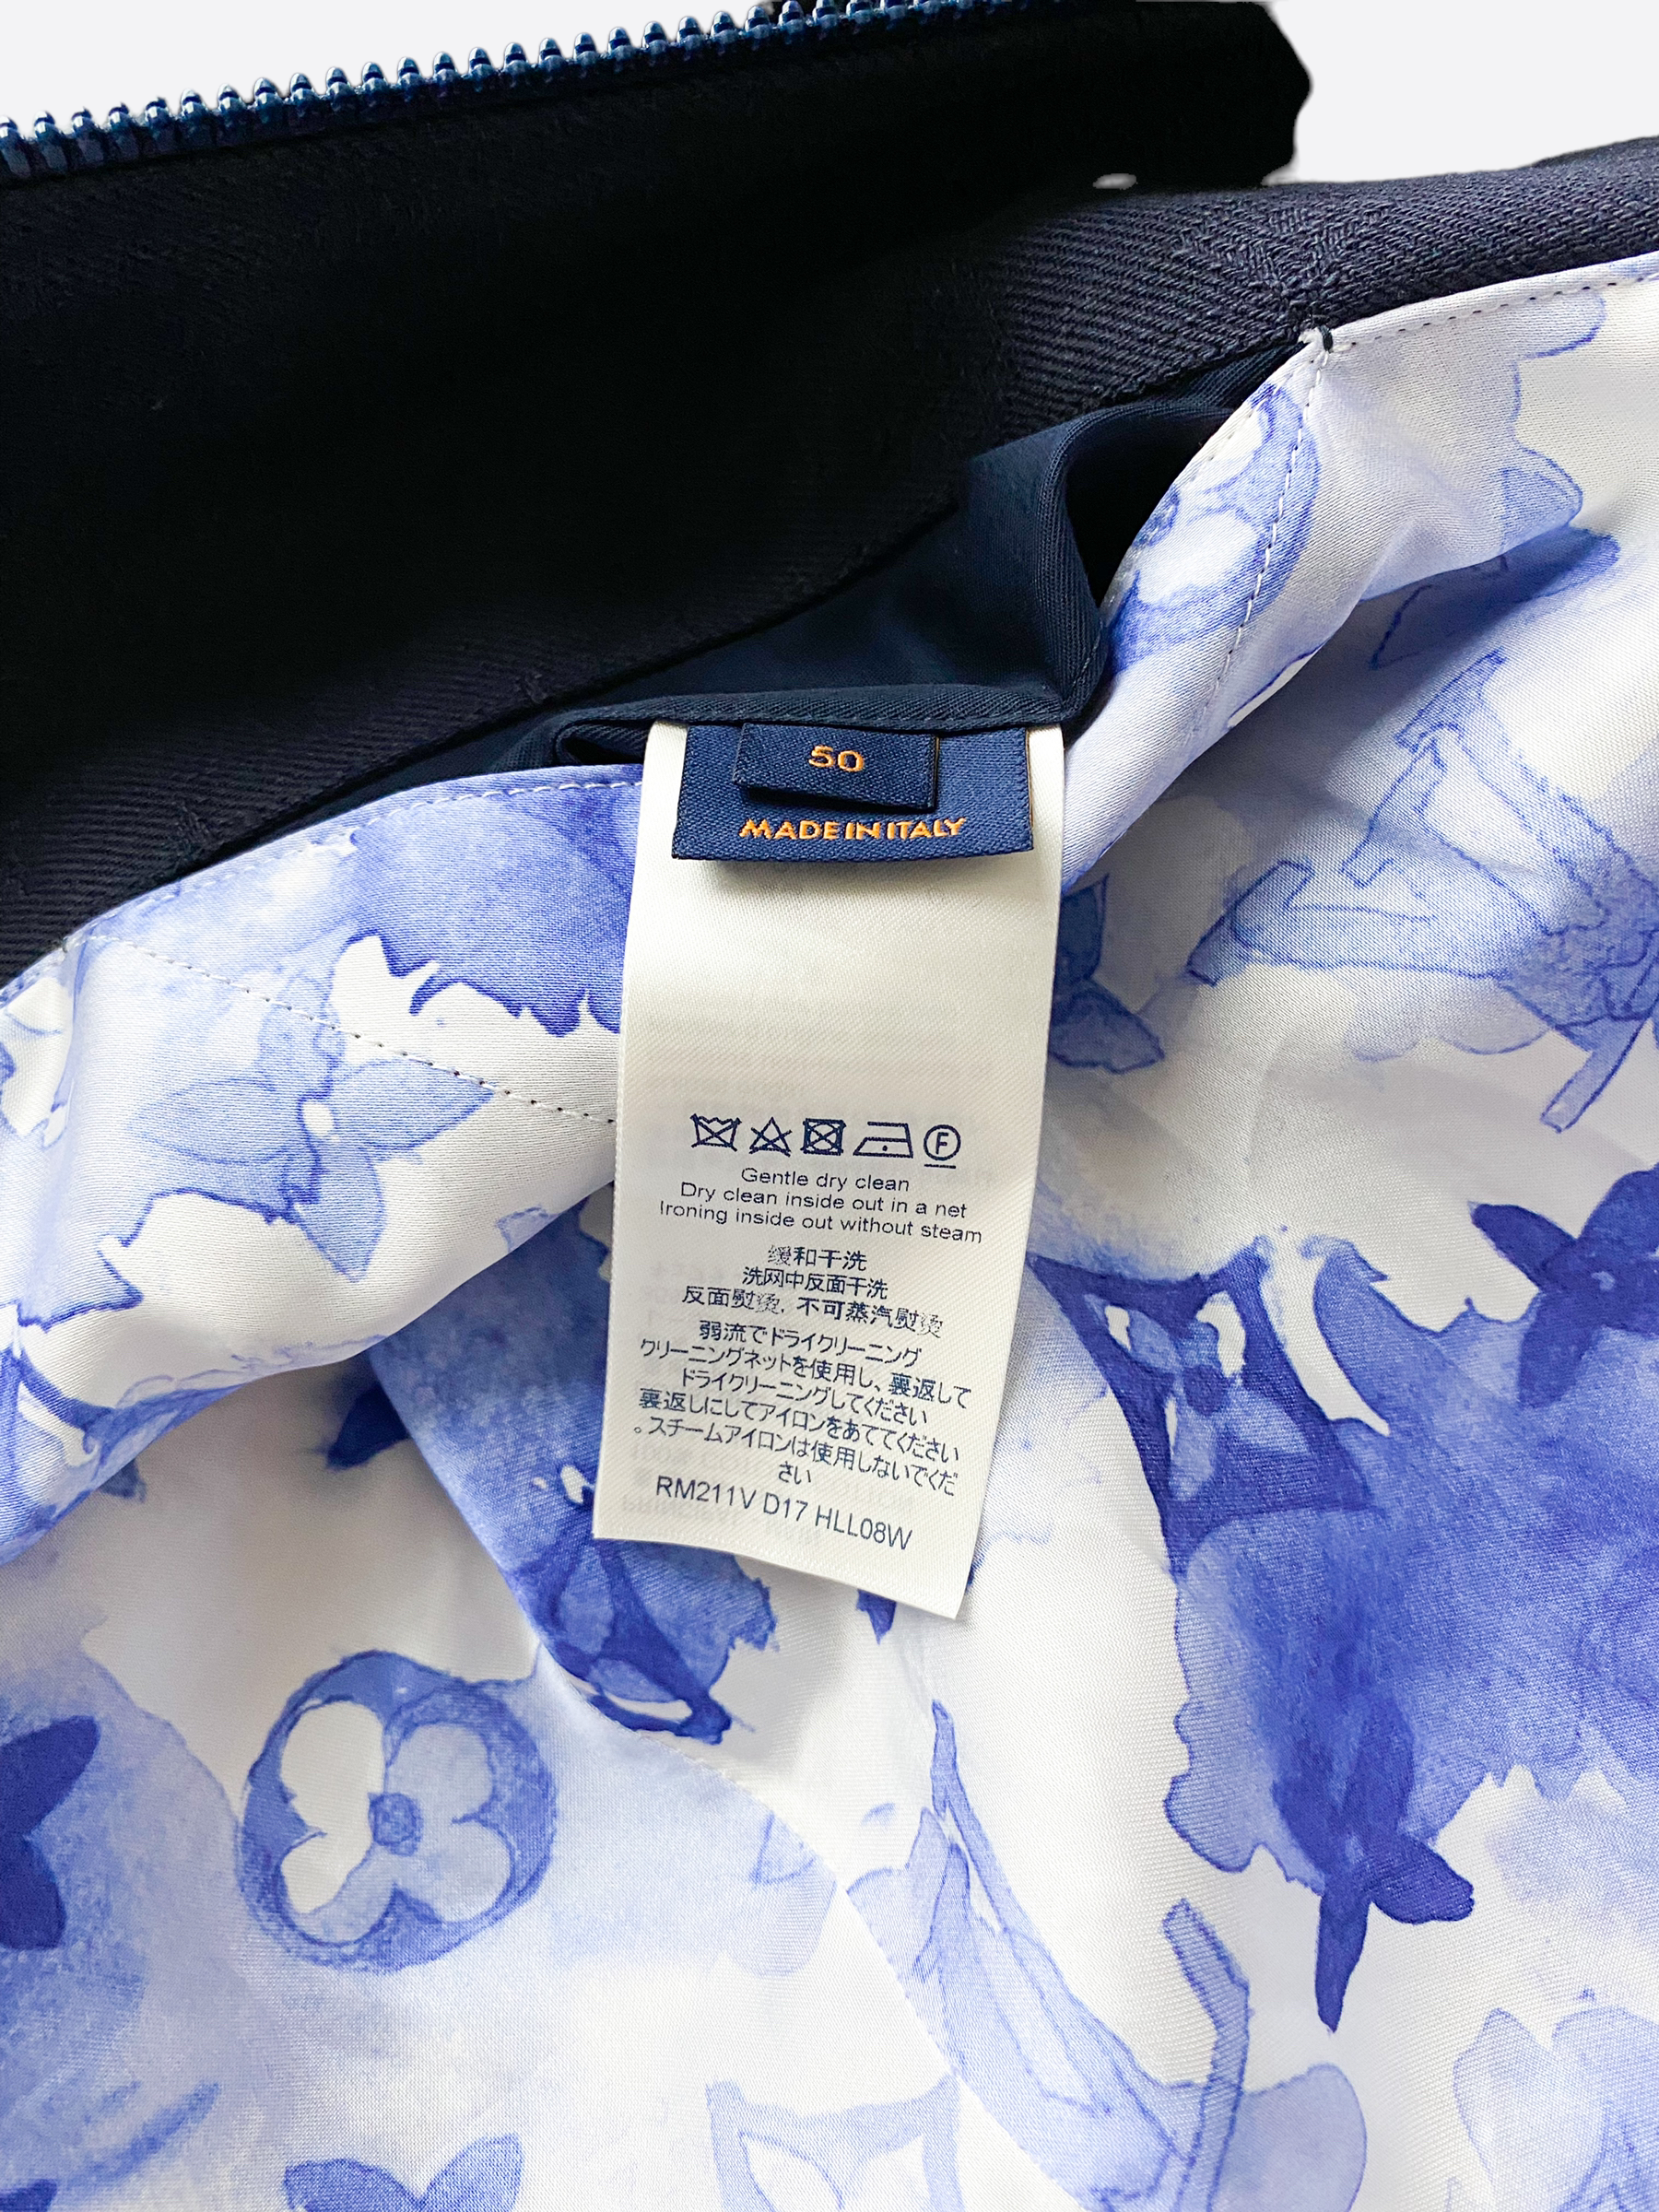 Louis Vuitton Watercolor Fleece Jacket